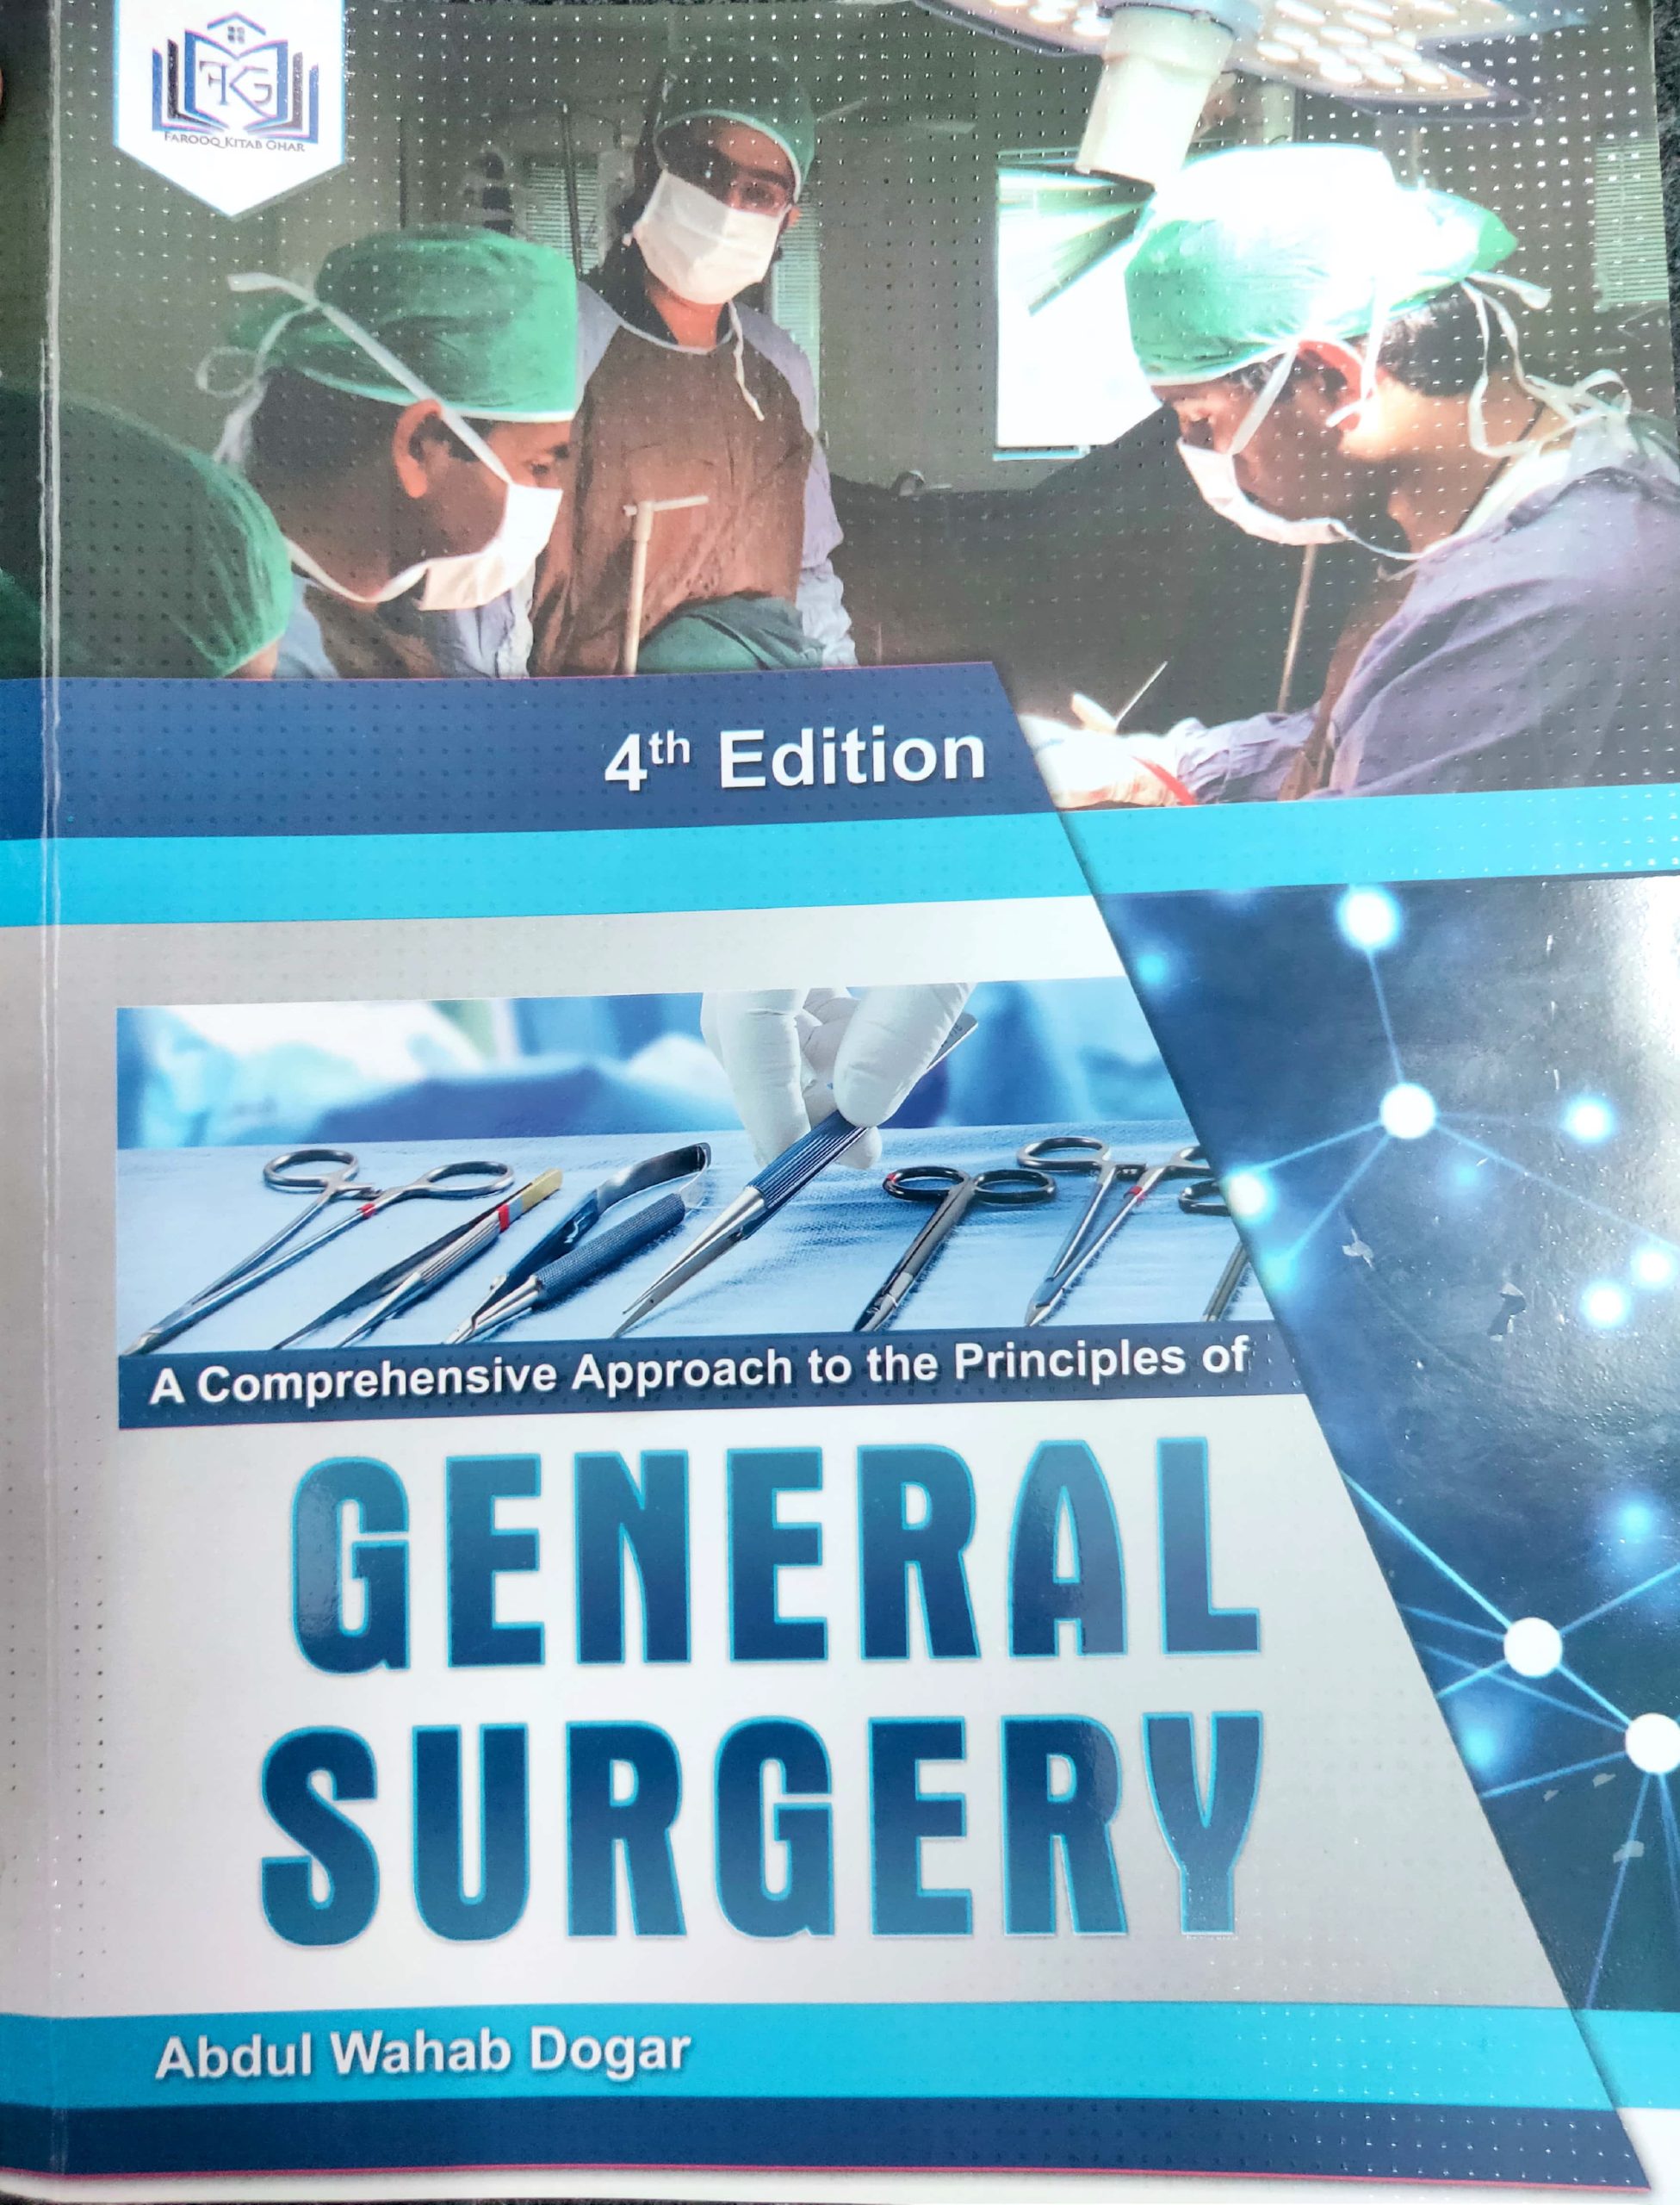 Dogar General Surgery by Abdul Wahab Dogar pdf book free download